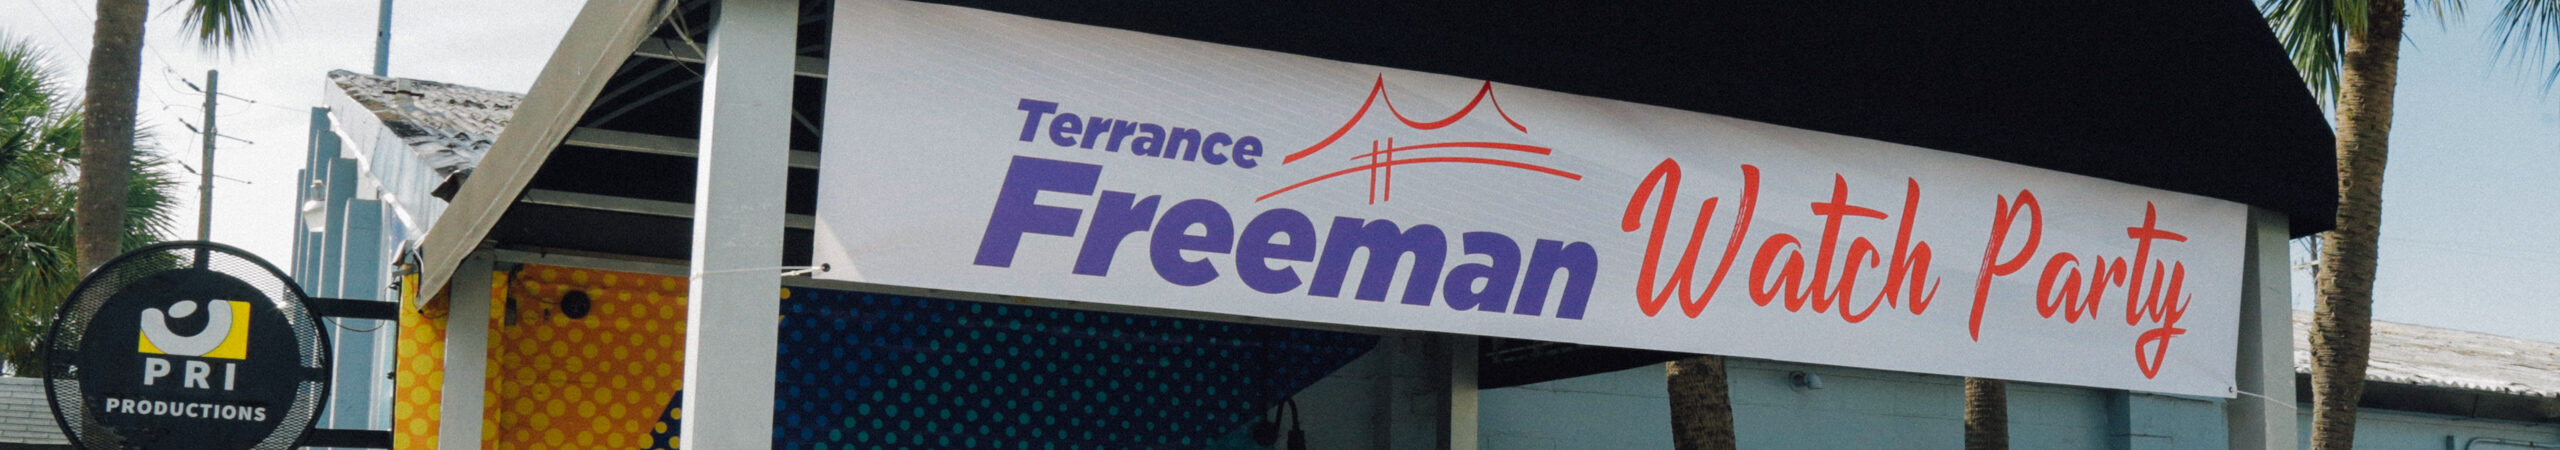 Councilman Terrance Freeman Election Watch Party